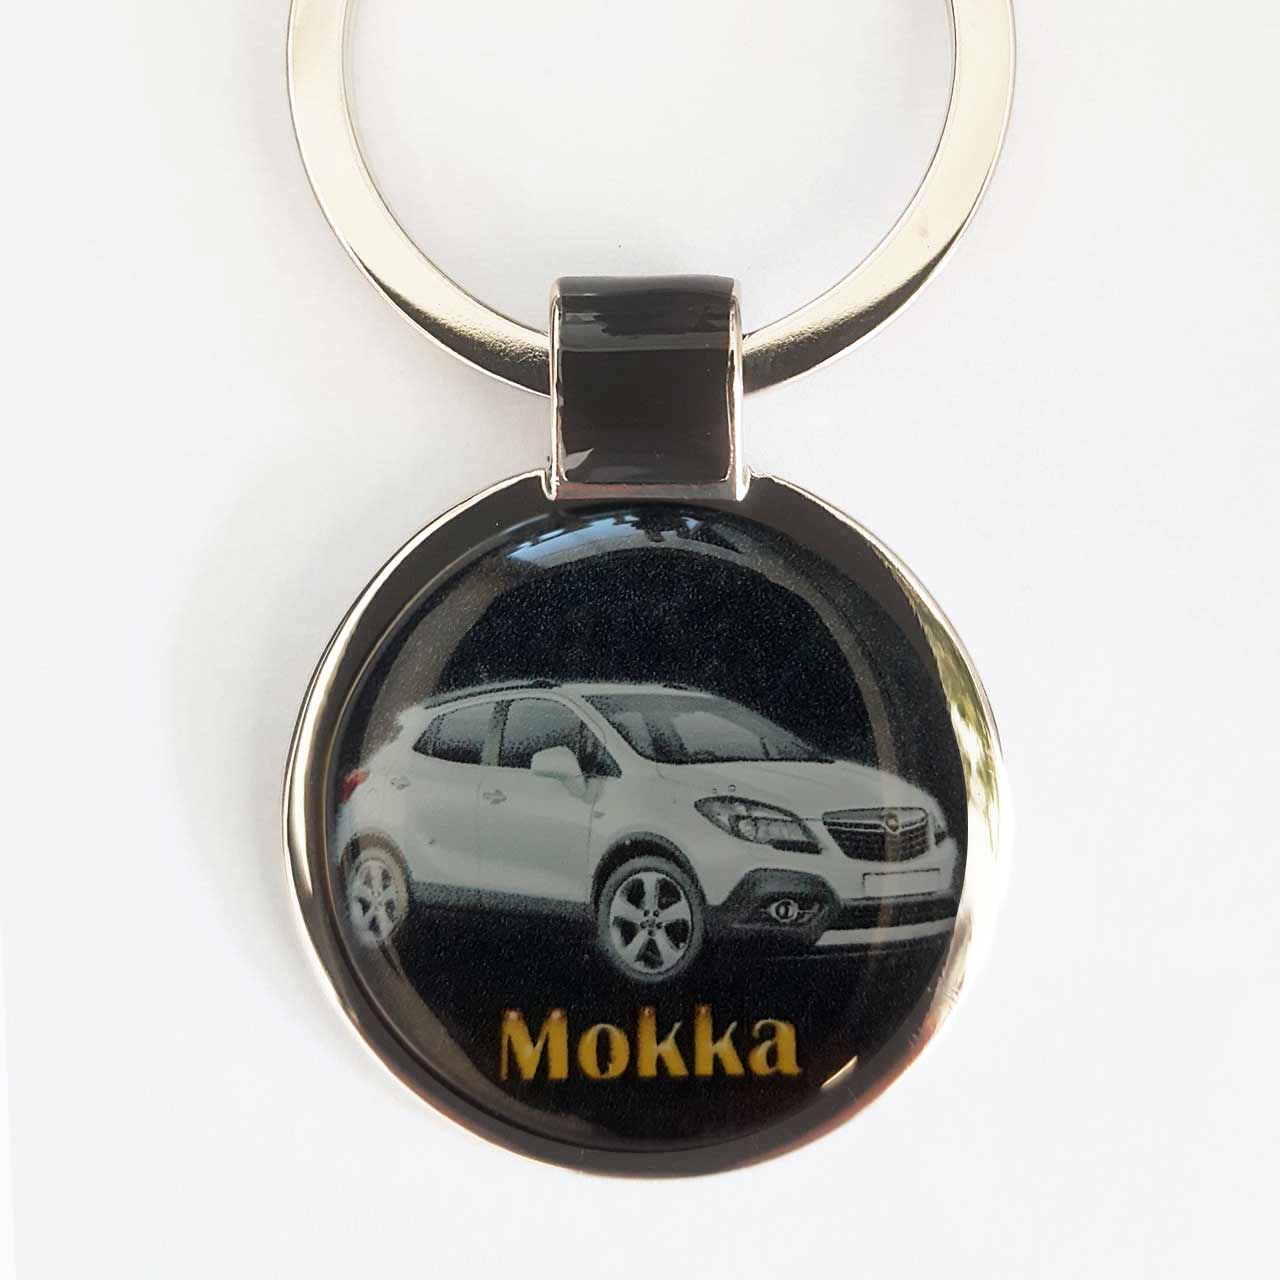 Opel Mokka Schlüsselanhänger mit eigener Textgravur